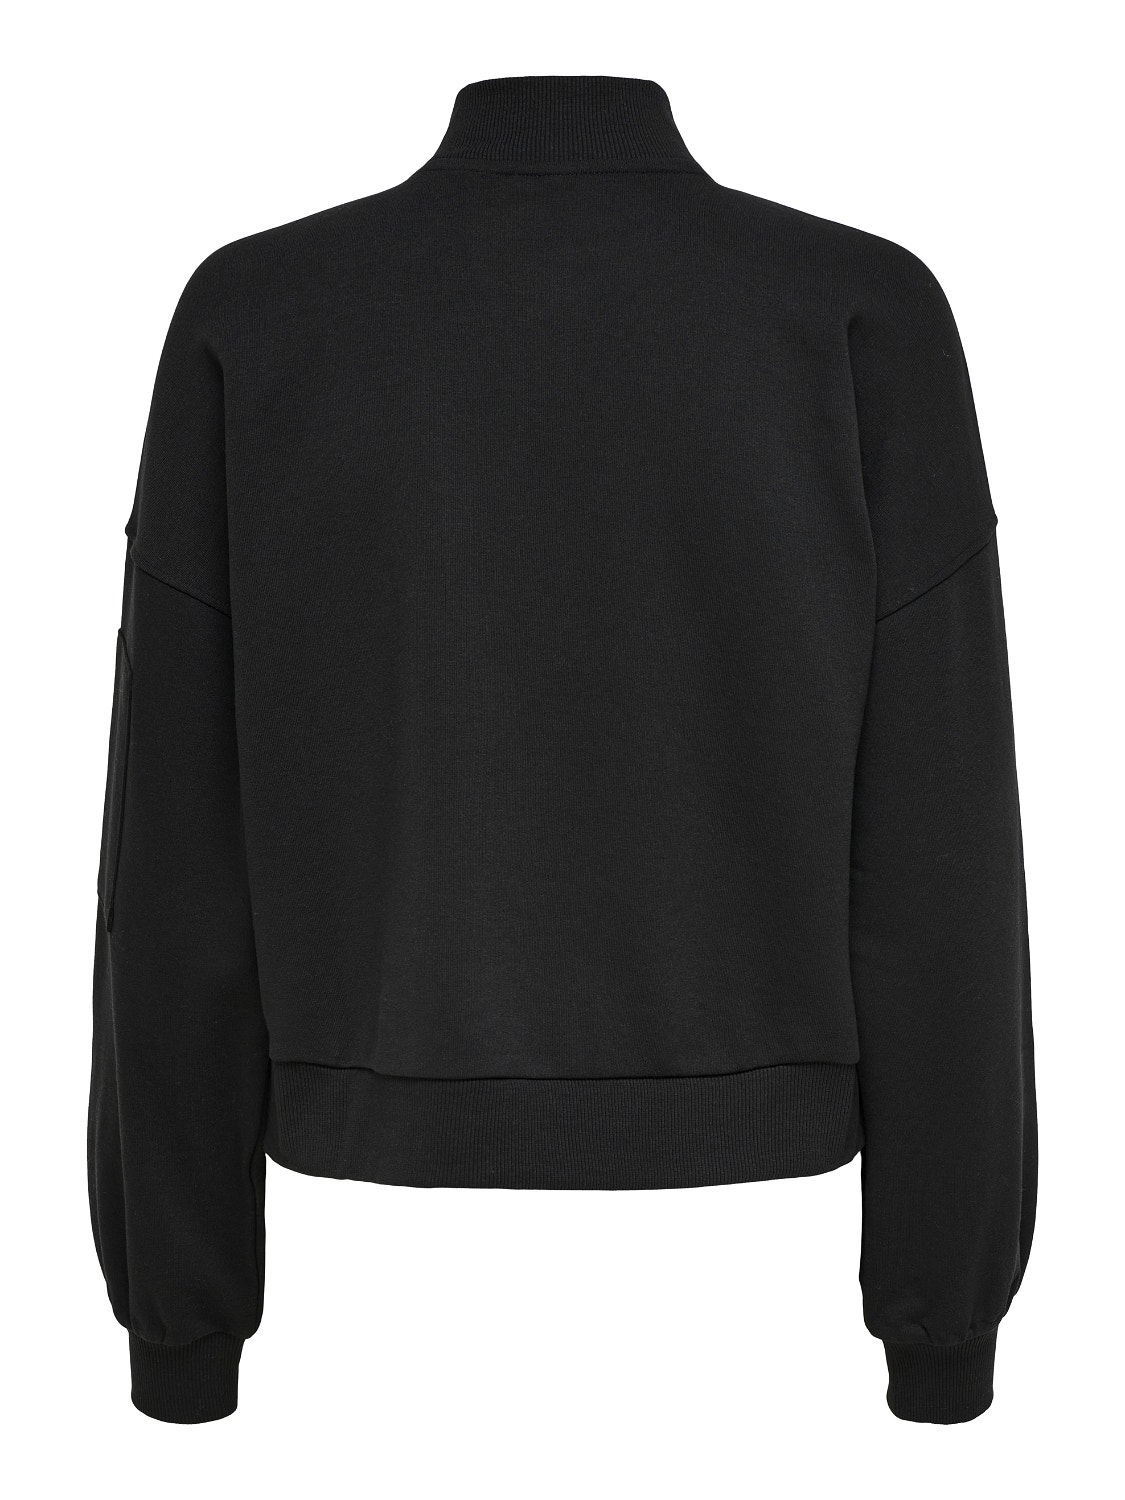 ONLY High-neck Sweatshirt -Black - 15236602